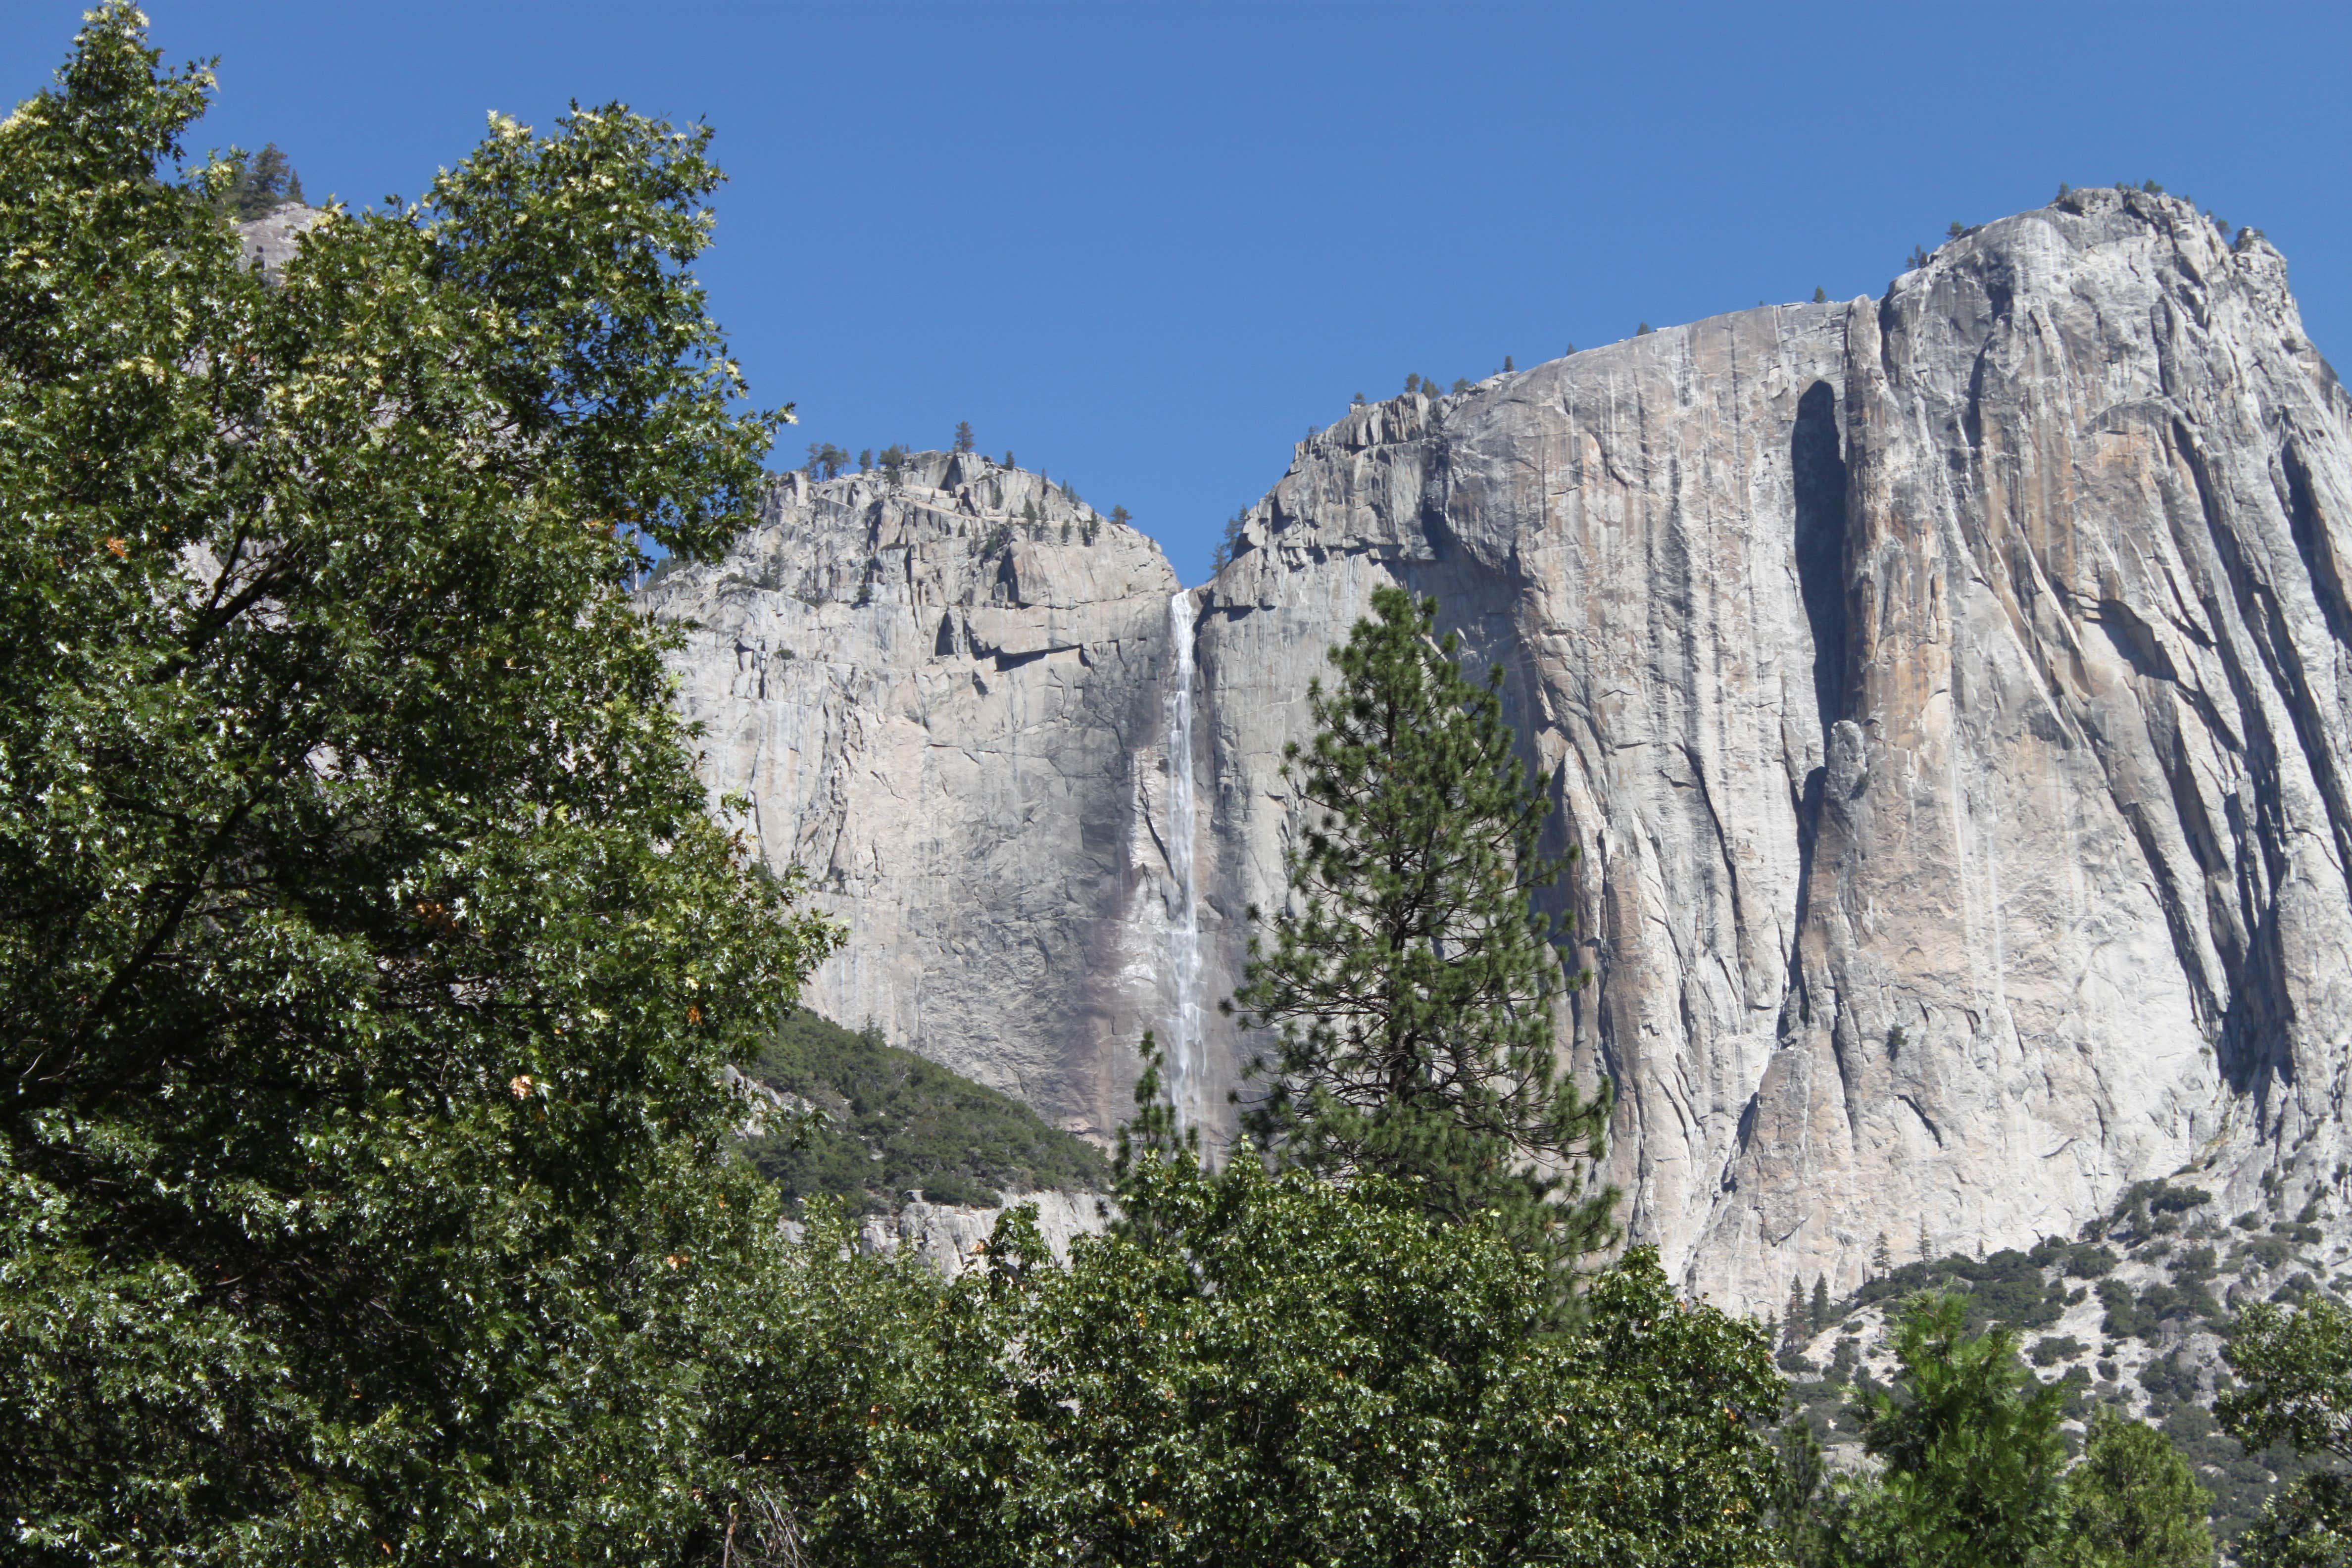 Camp 4 - Yosemite National Park (U.S. National Park Service)